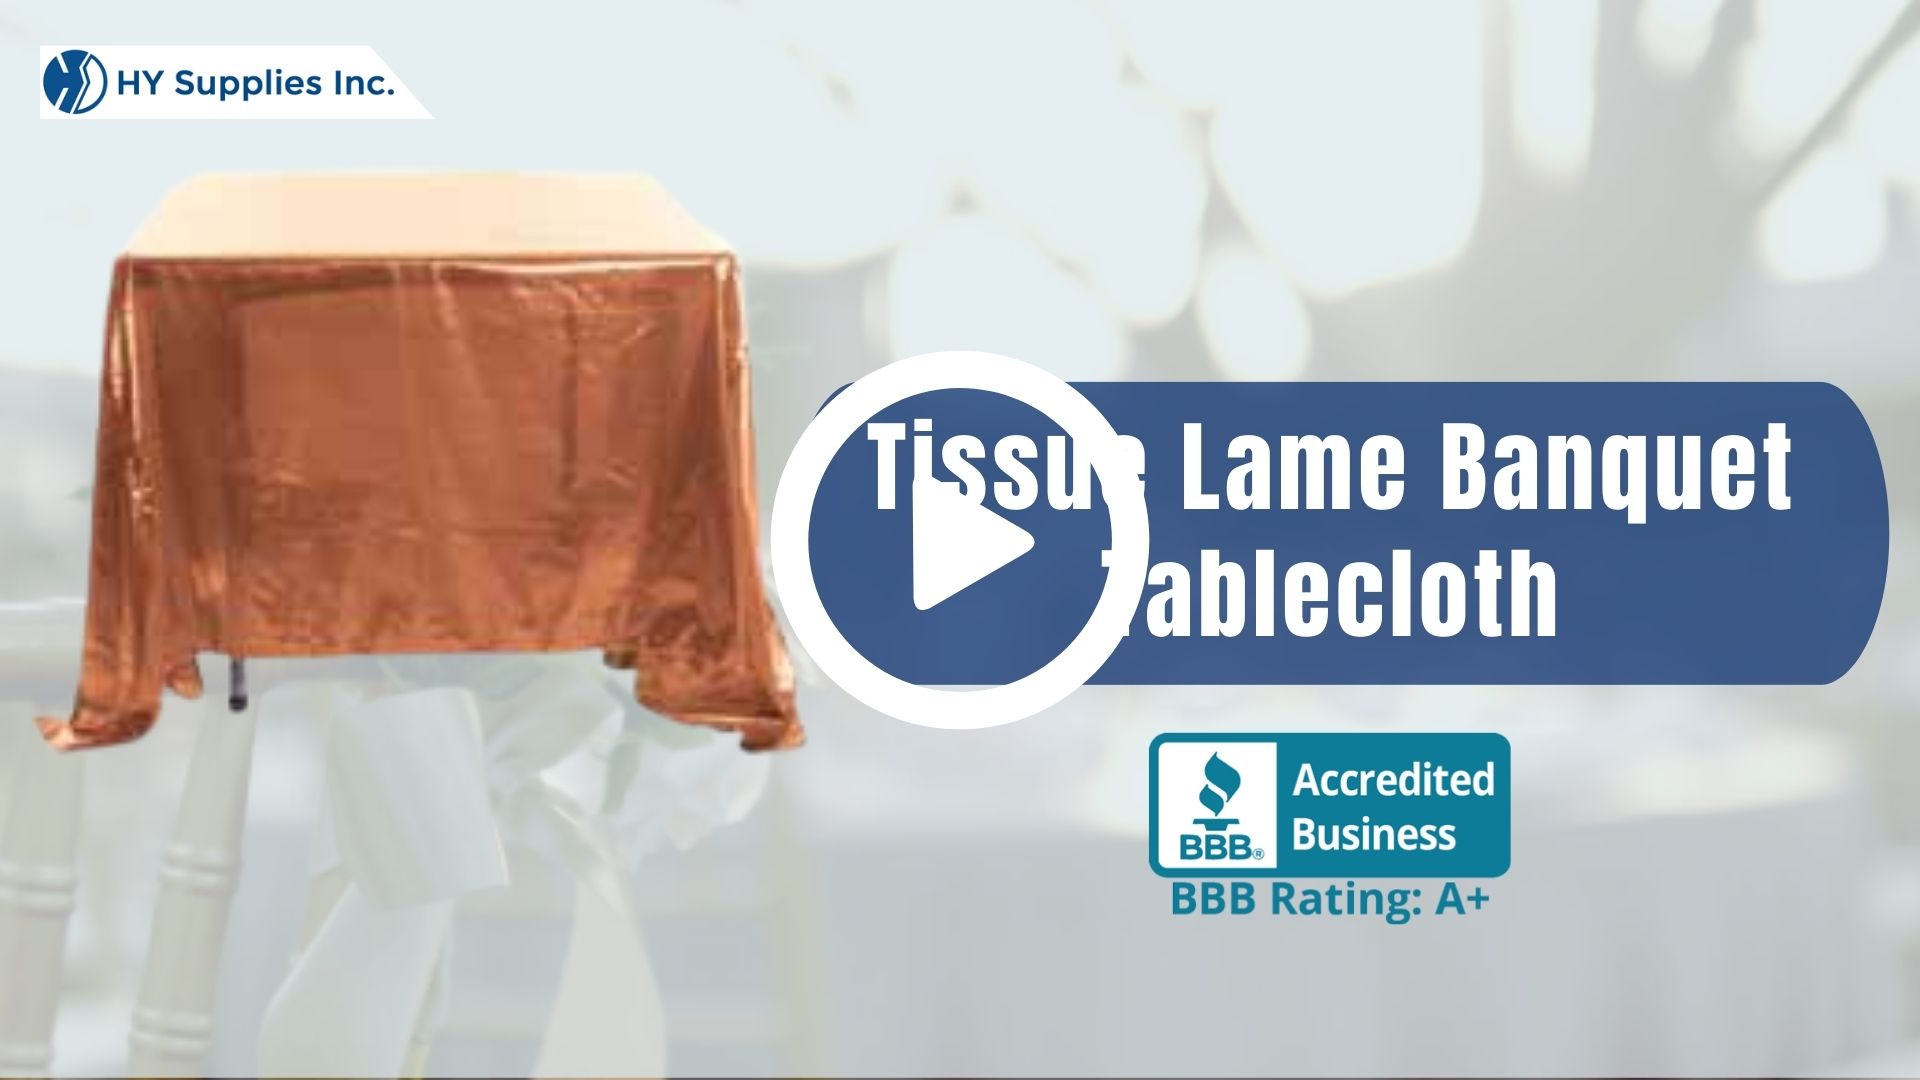 Tissue Lame Banquet Tablecloth